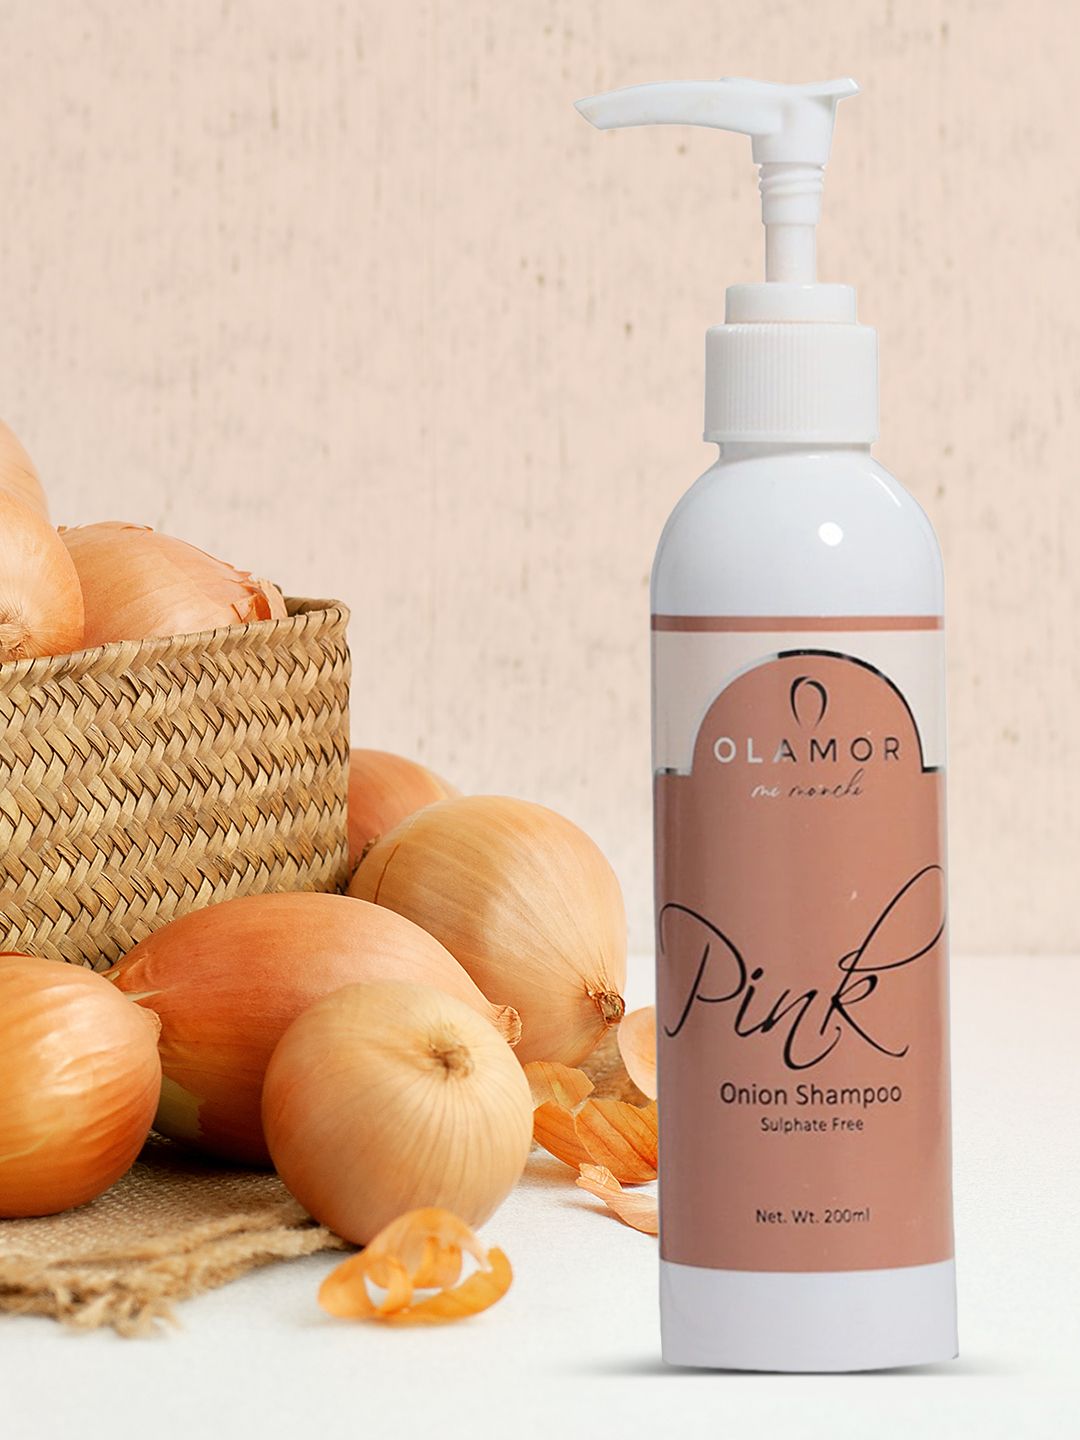 OLAMOR Pink Onion Hair Growth Shampoo 200 ml Price in India